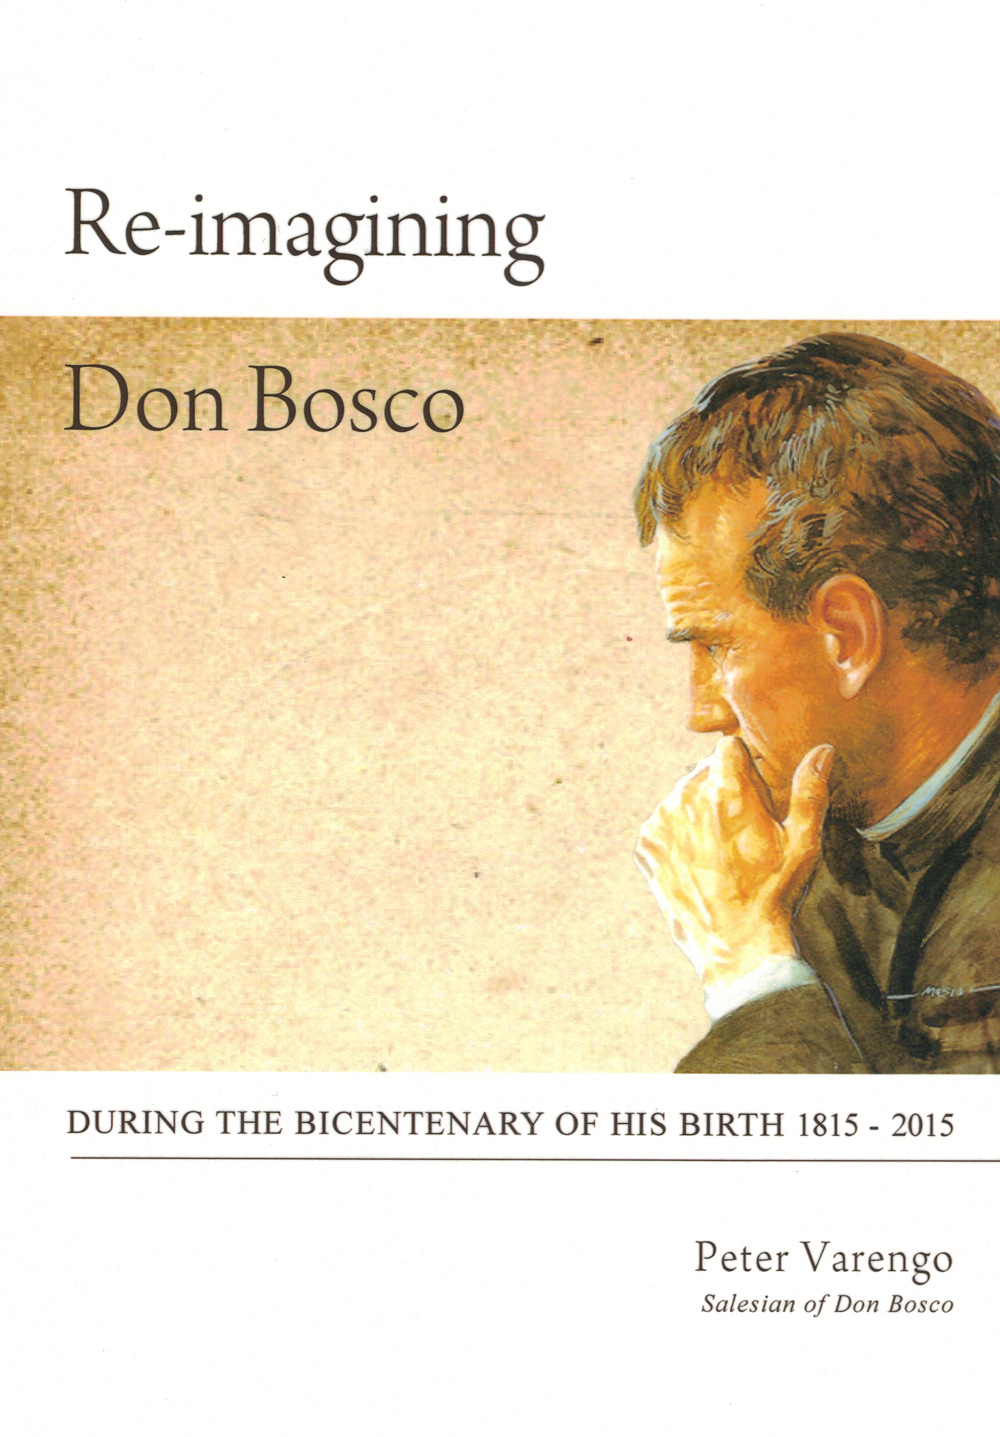 Re-imagining Don Bosco